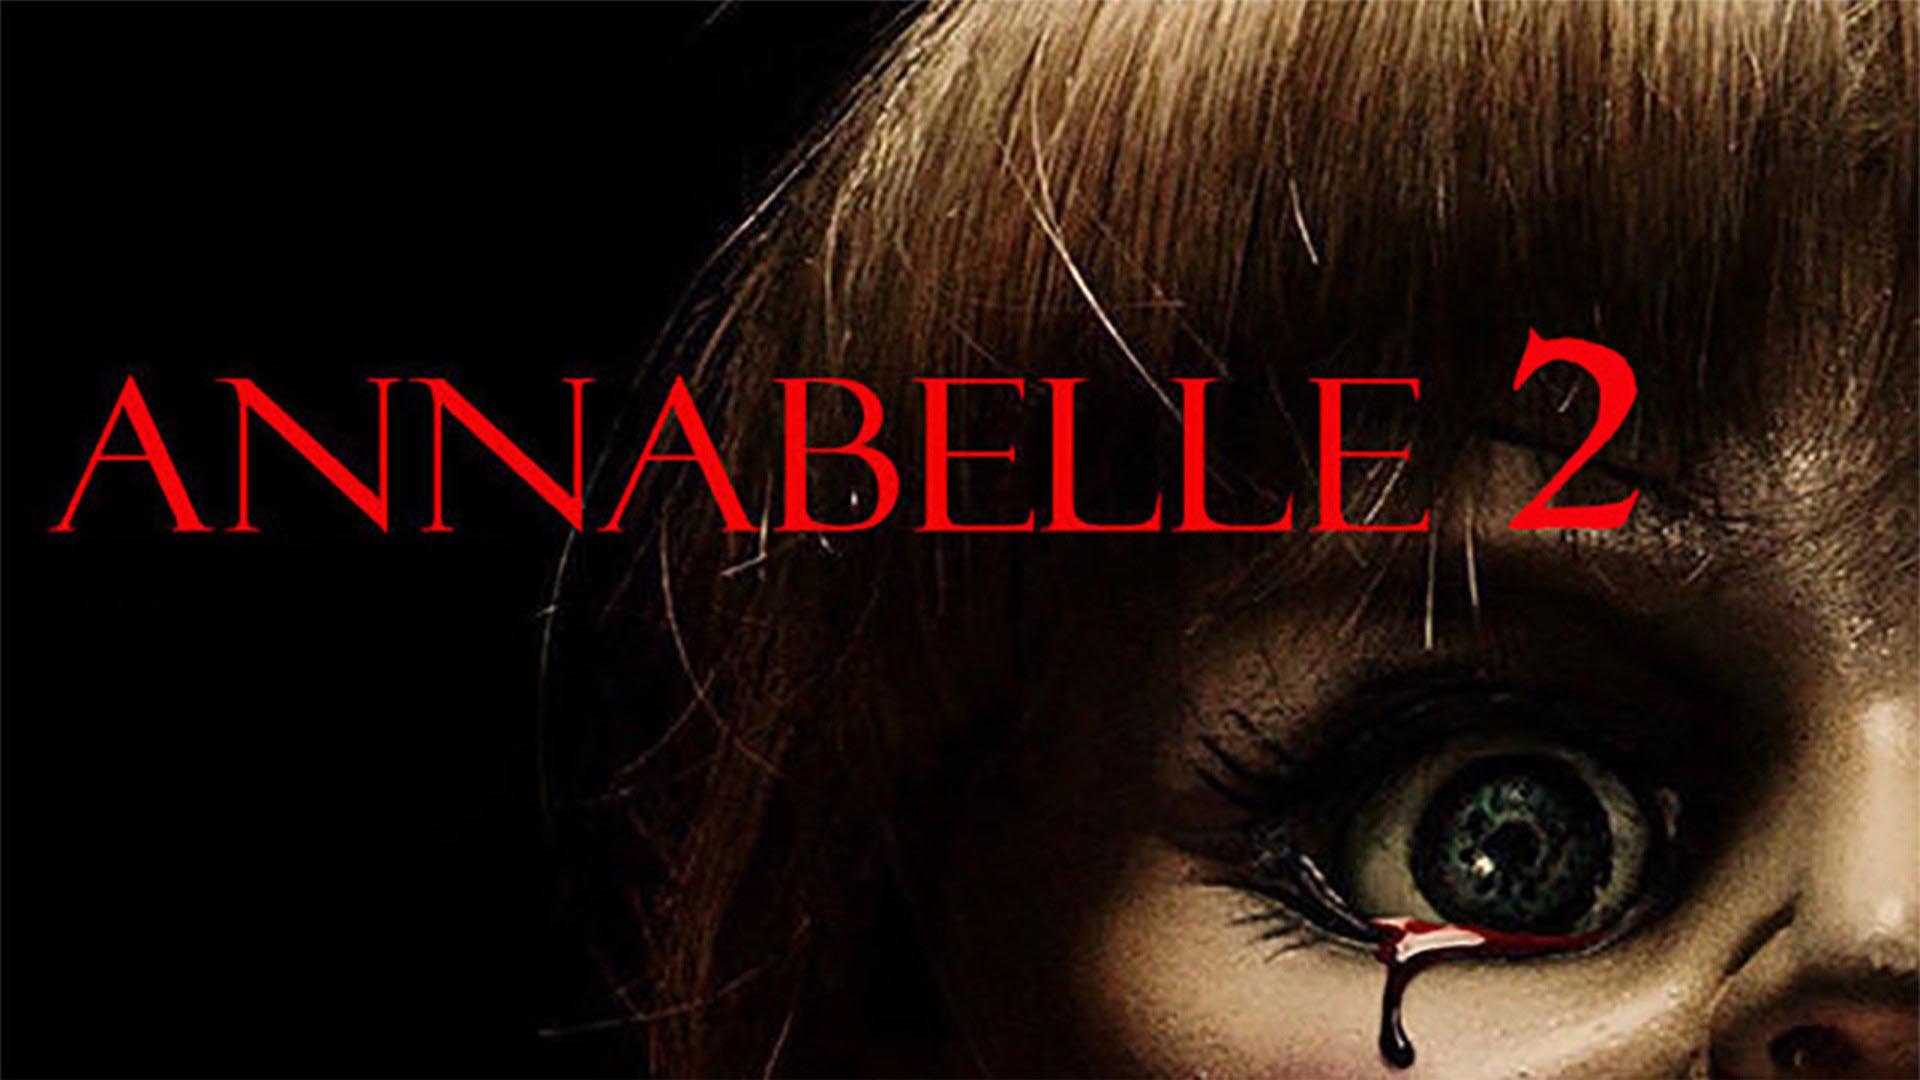 Annabelle 2 Online Subtitrat In Romana Annabelle 2: Warner Bros. presenta il poster alternativo italiano.